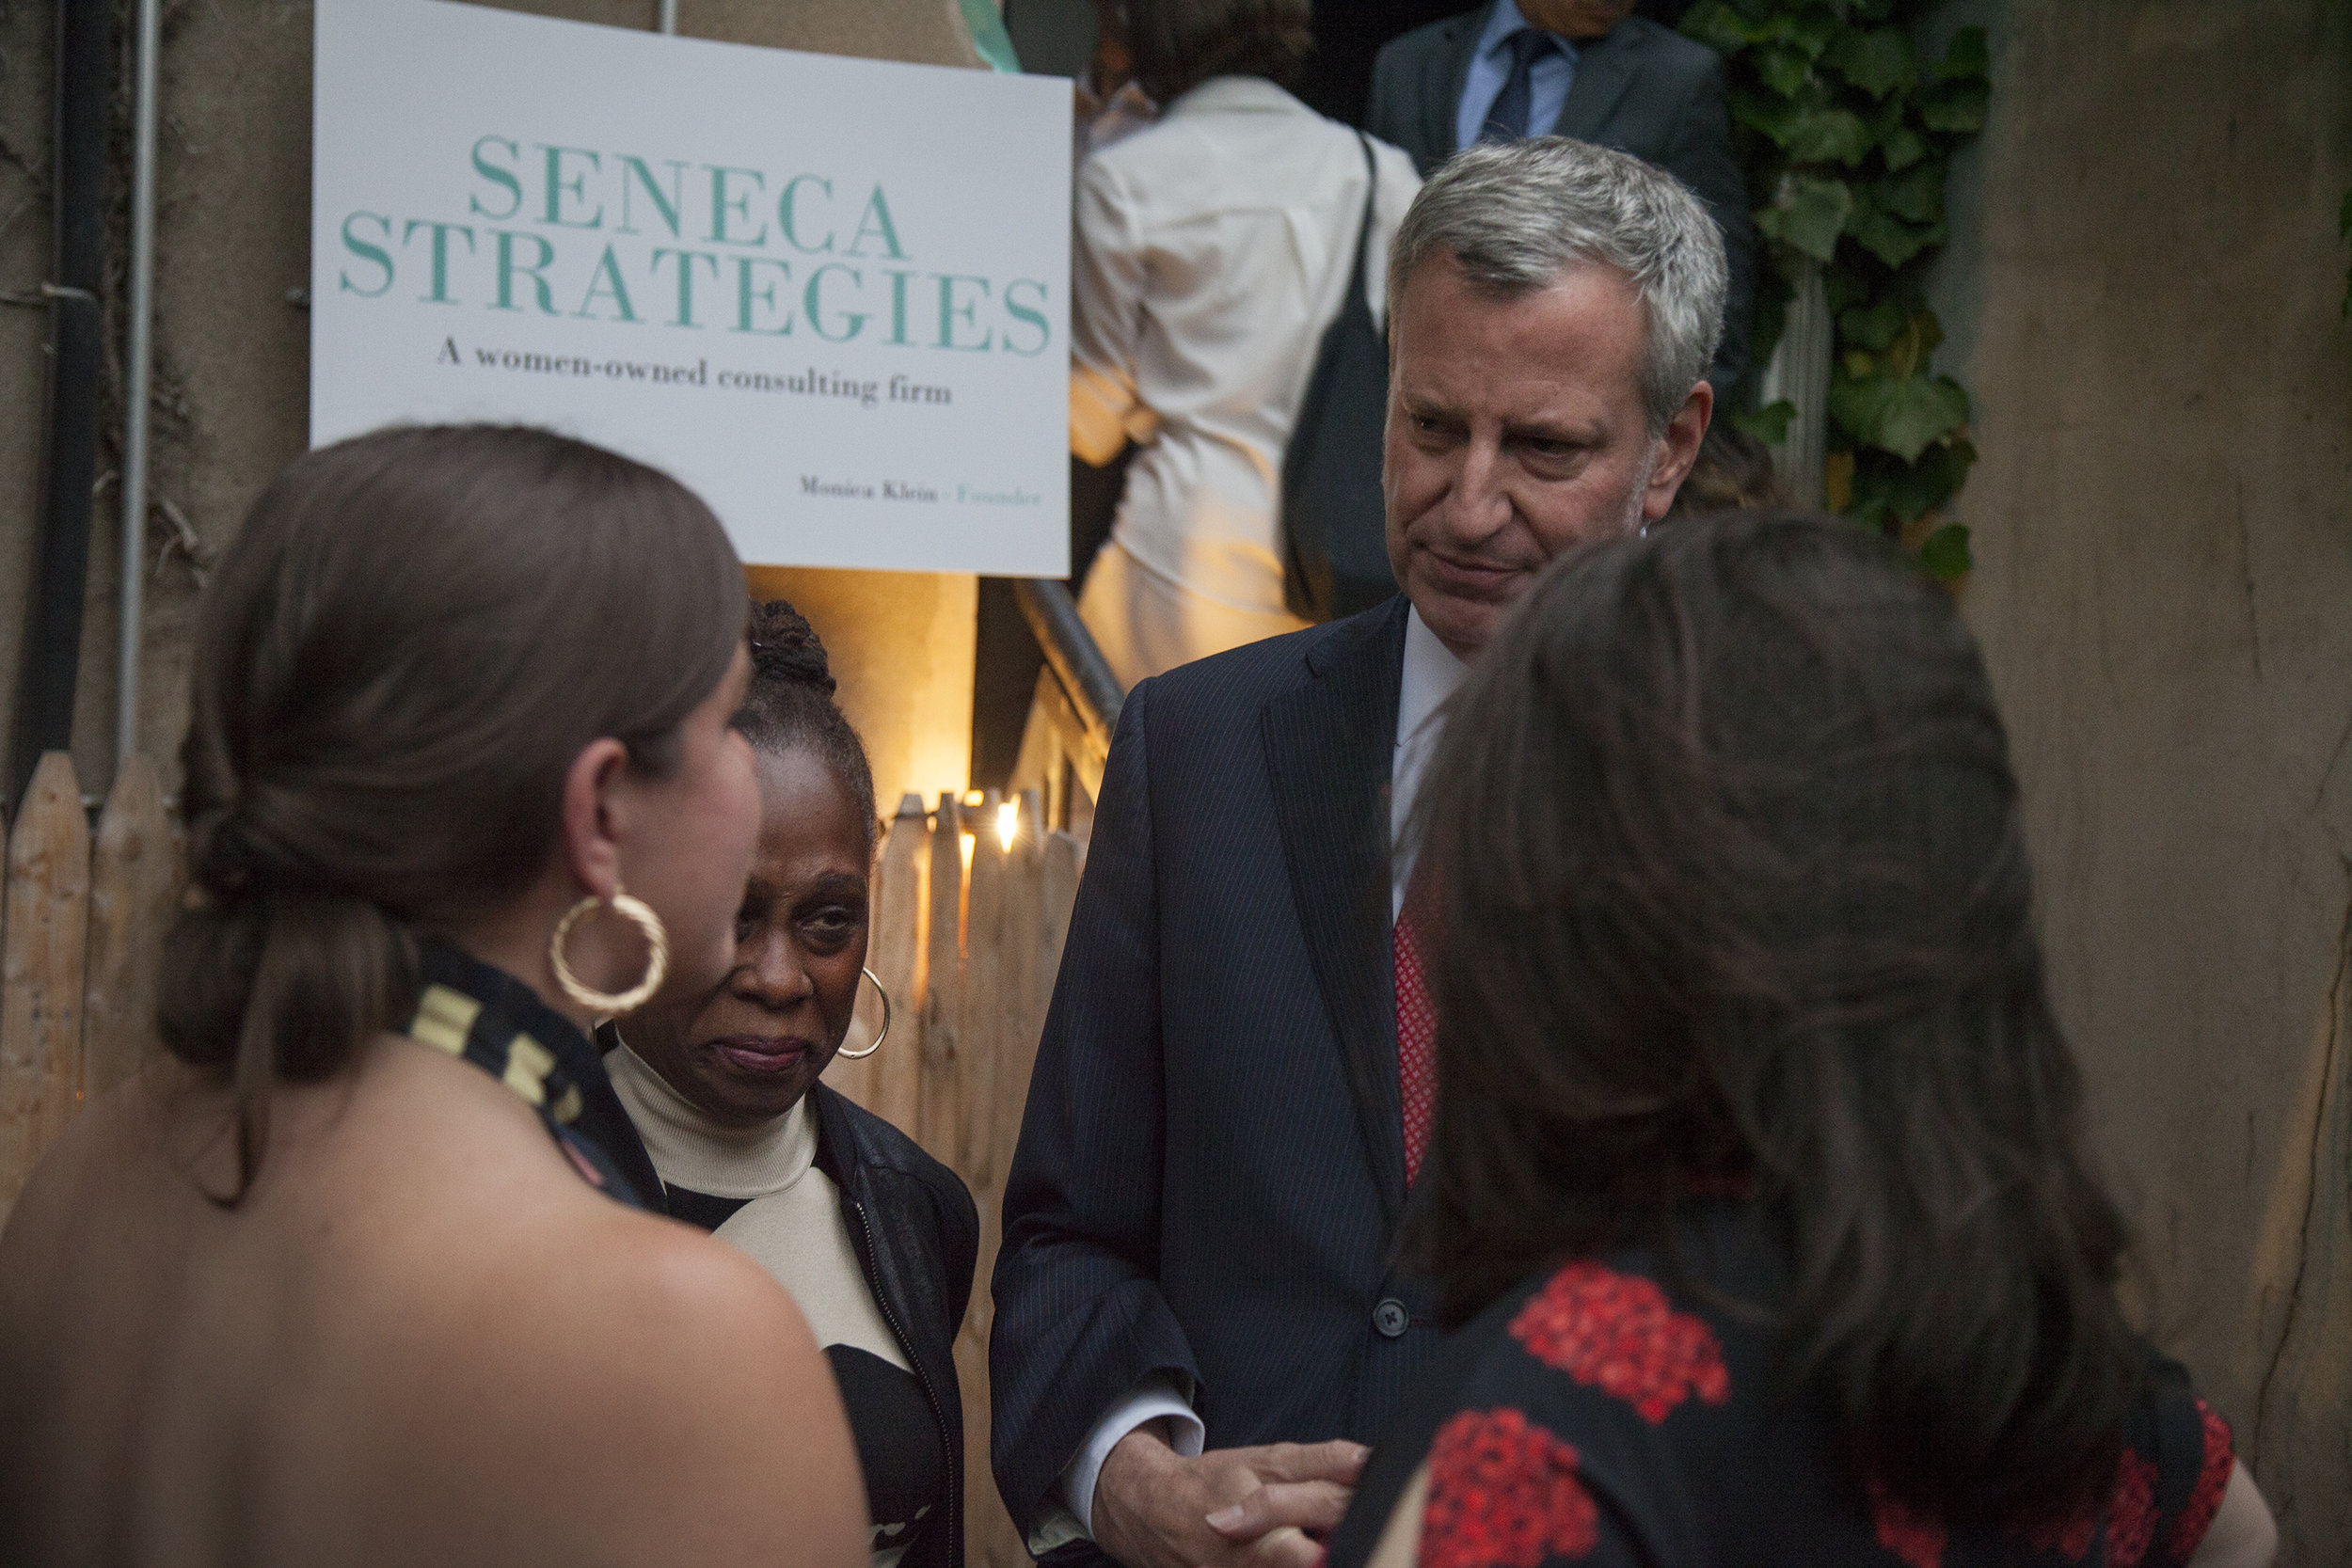 Mayor Bill de Blasio lends his support to Monica Klein &amp; Elana Leopold of Seneca Strategies